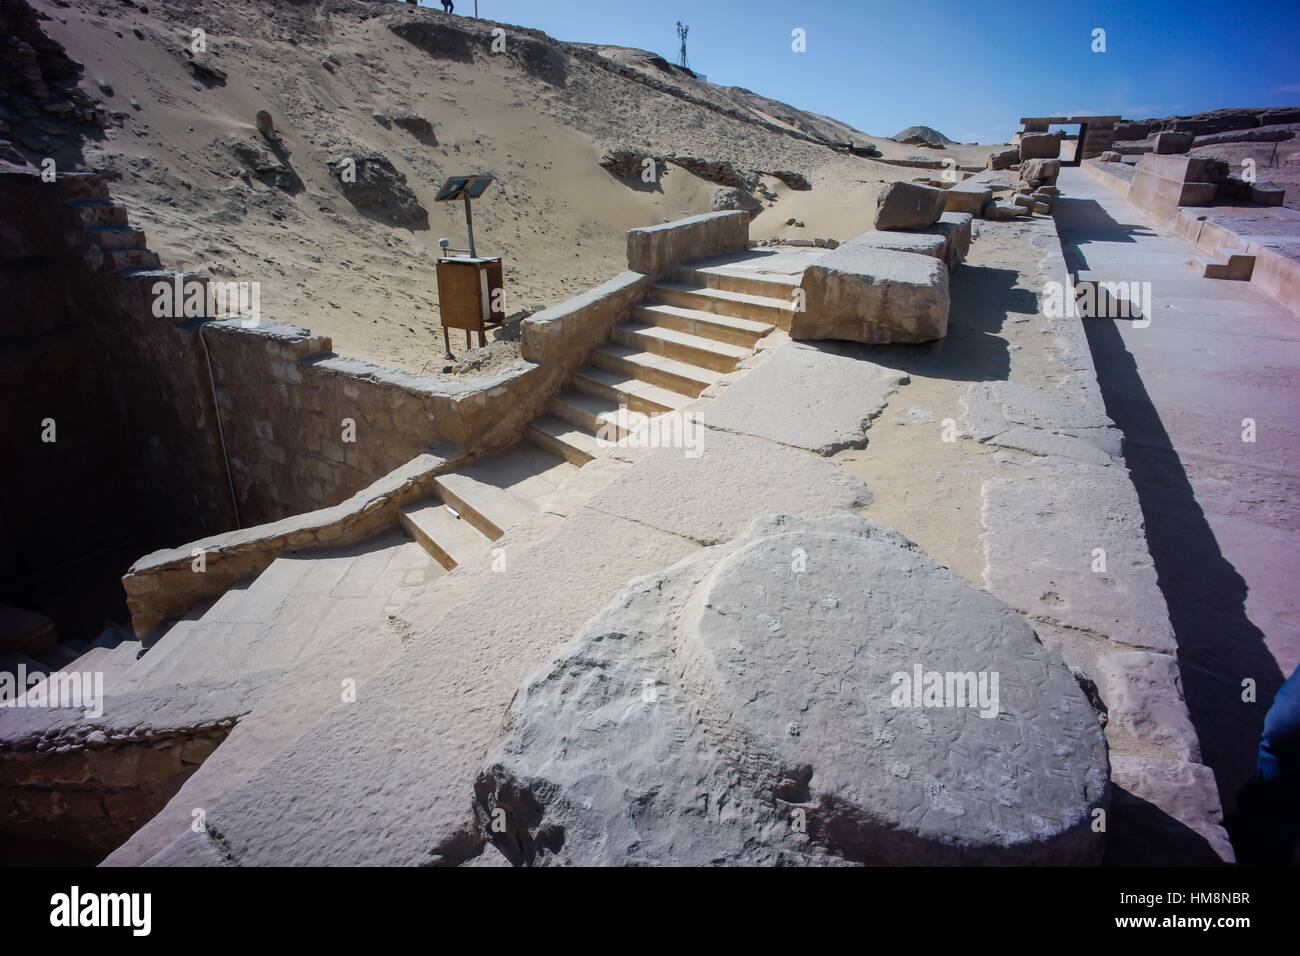 Anus Causeway. Los restos arqueológicos. La necrópolis de Saqqara. Egipto. Foto de stock